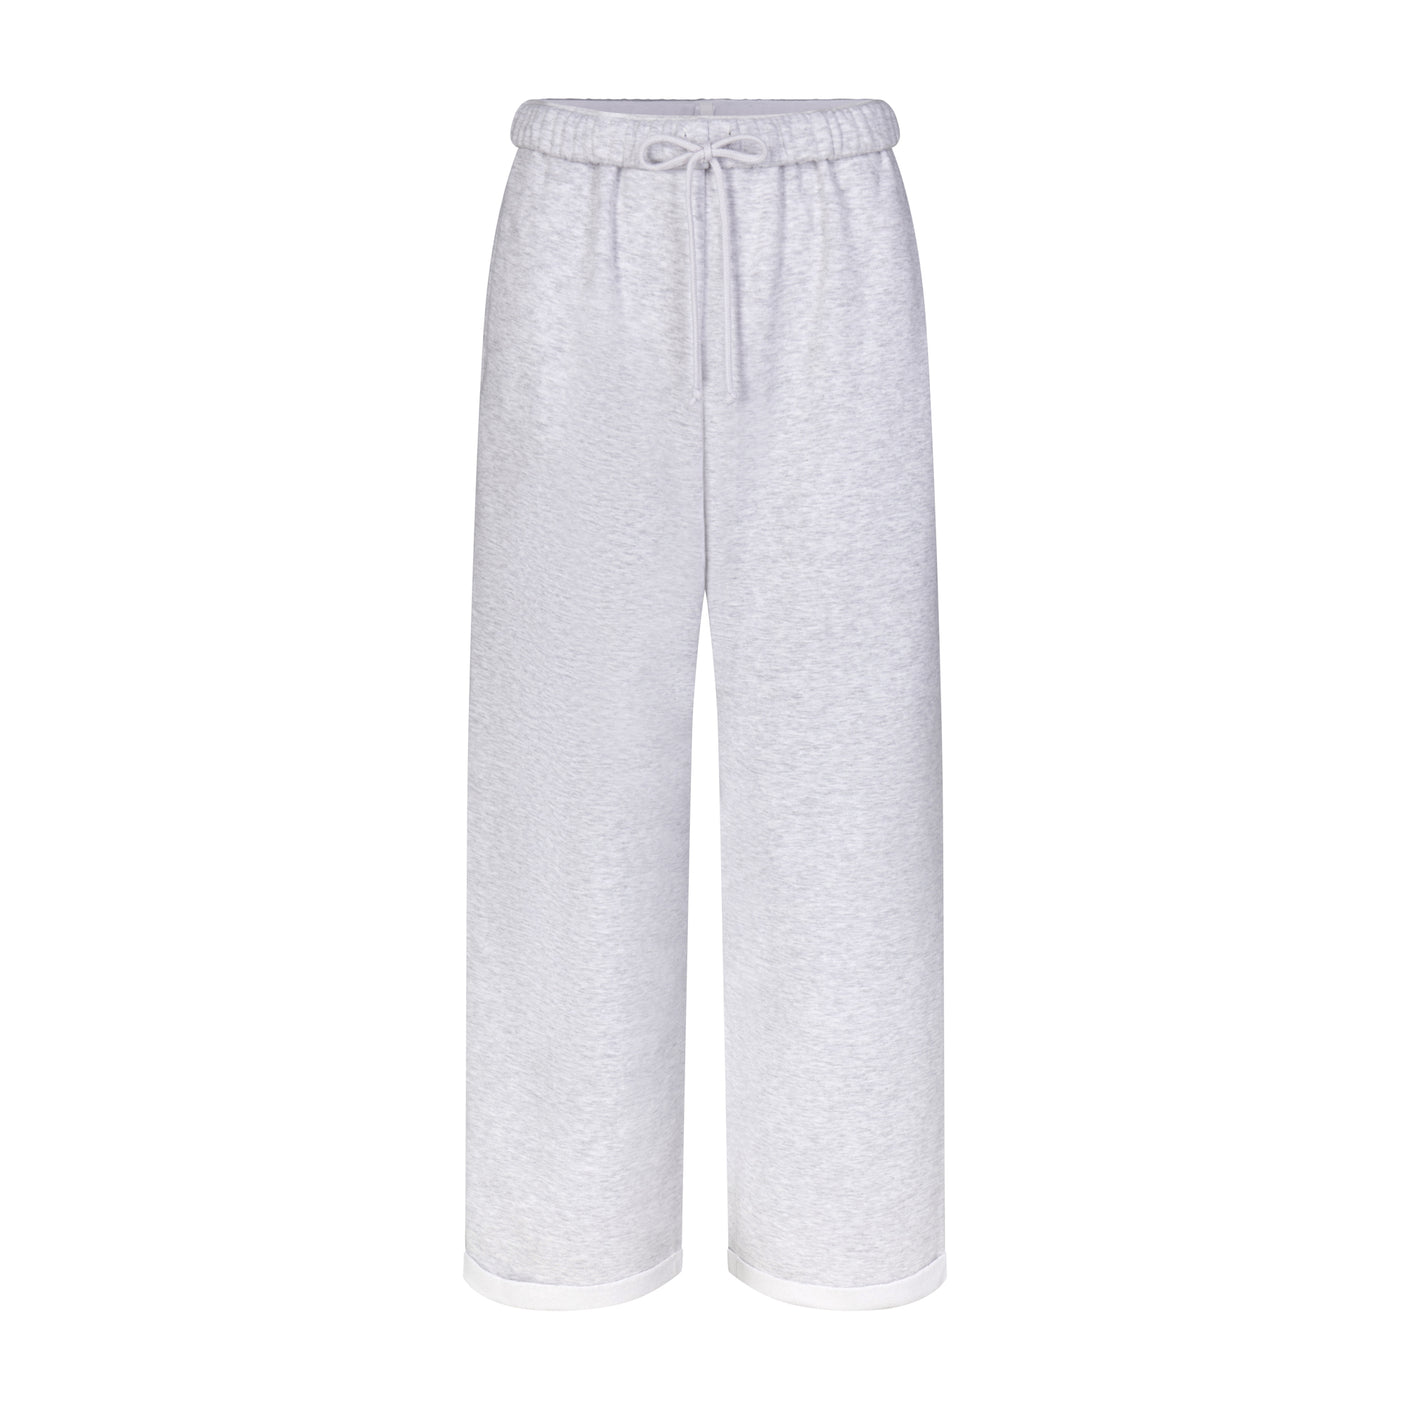 Buy Light Gray Side Pocket Straight Cargo Pants Cotton for Best